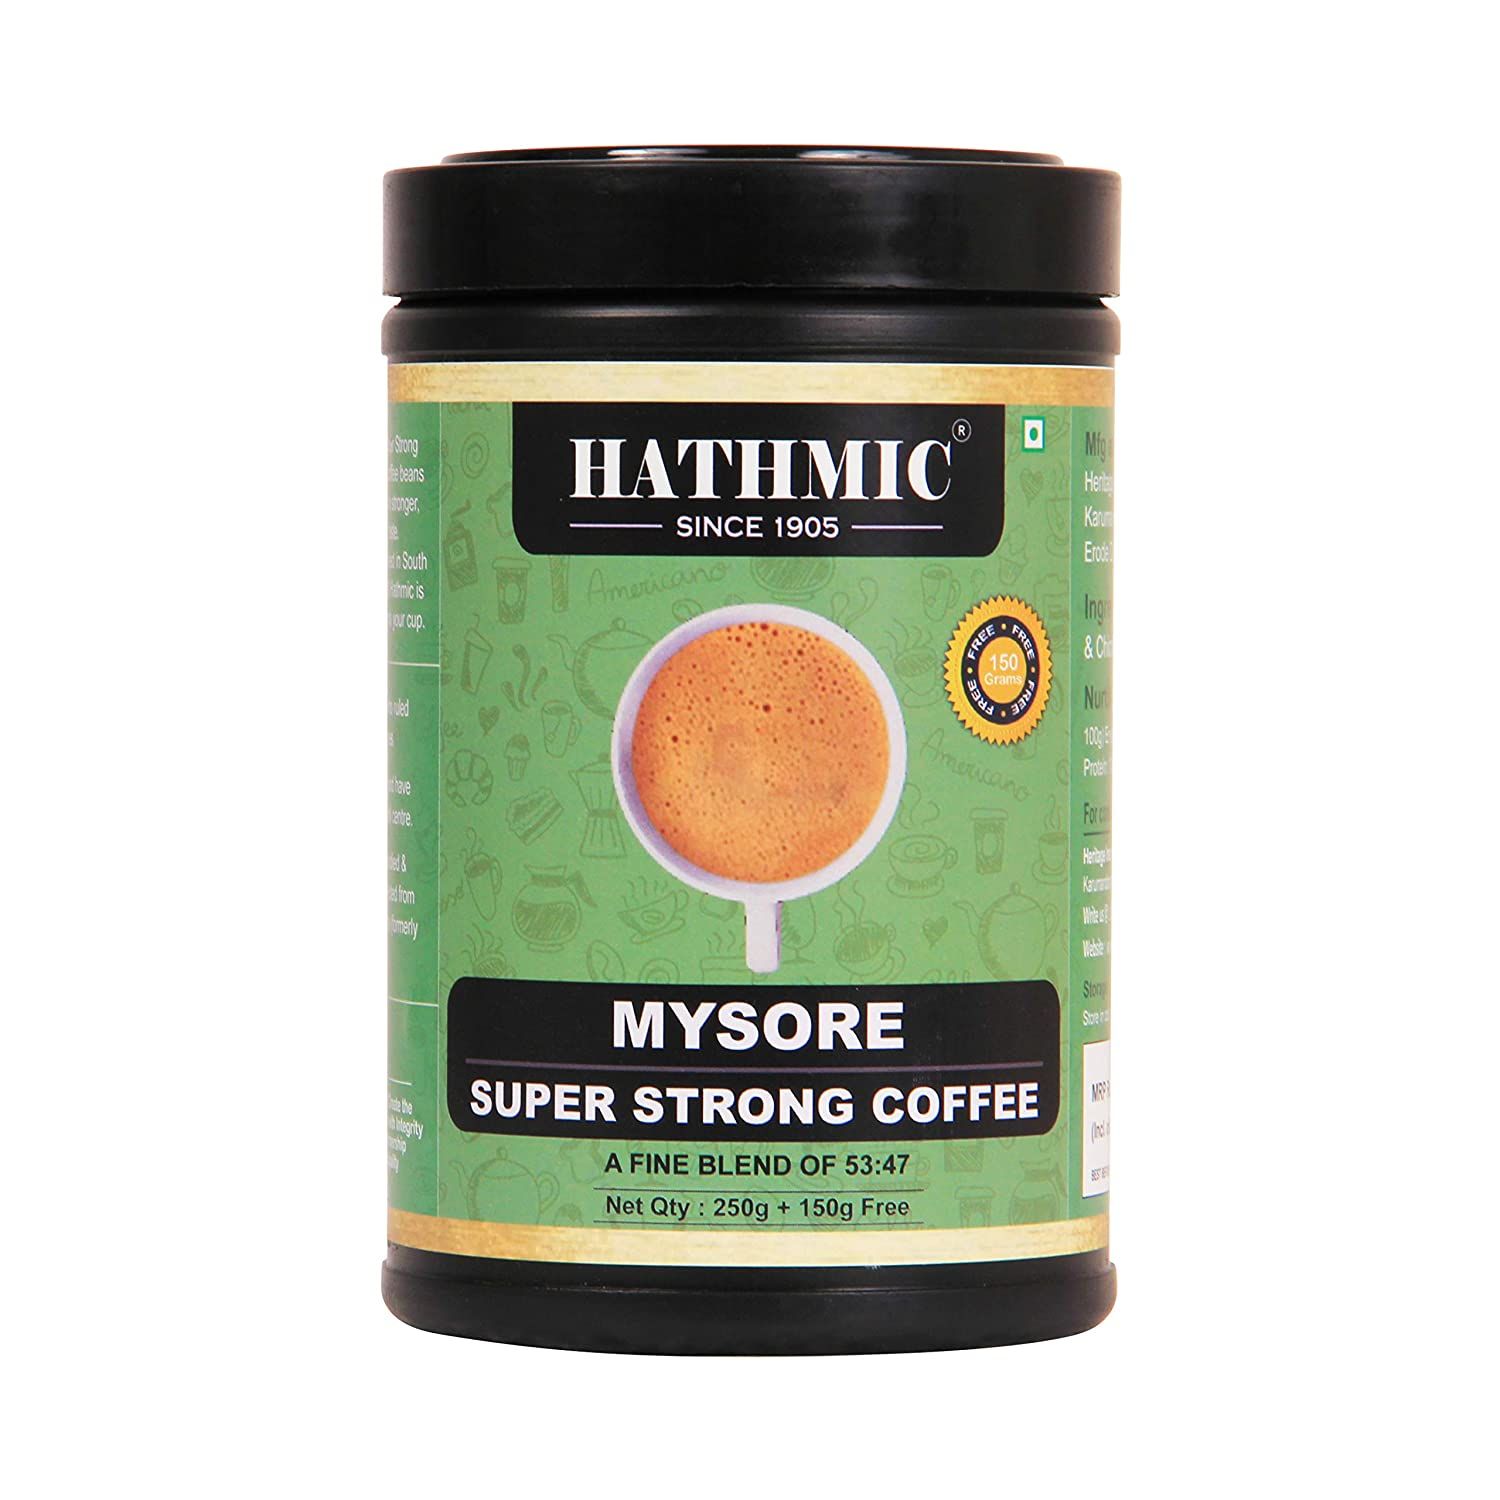 Hathmic Mysore Super Strong Coffee Image